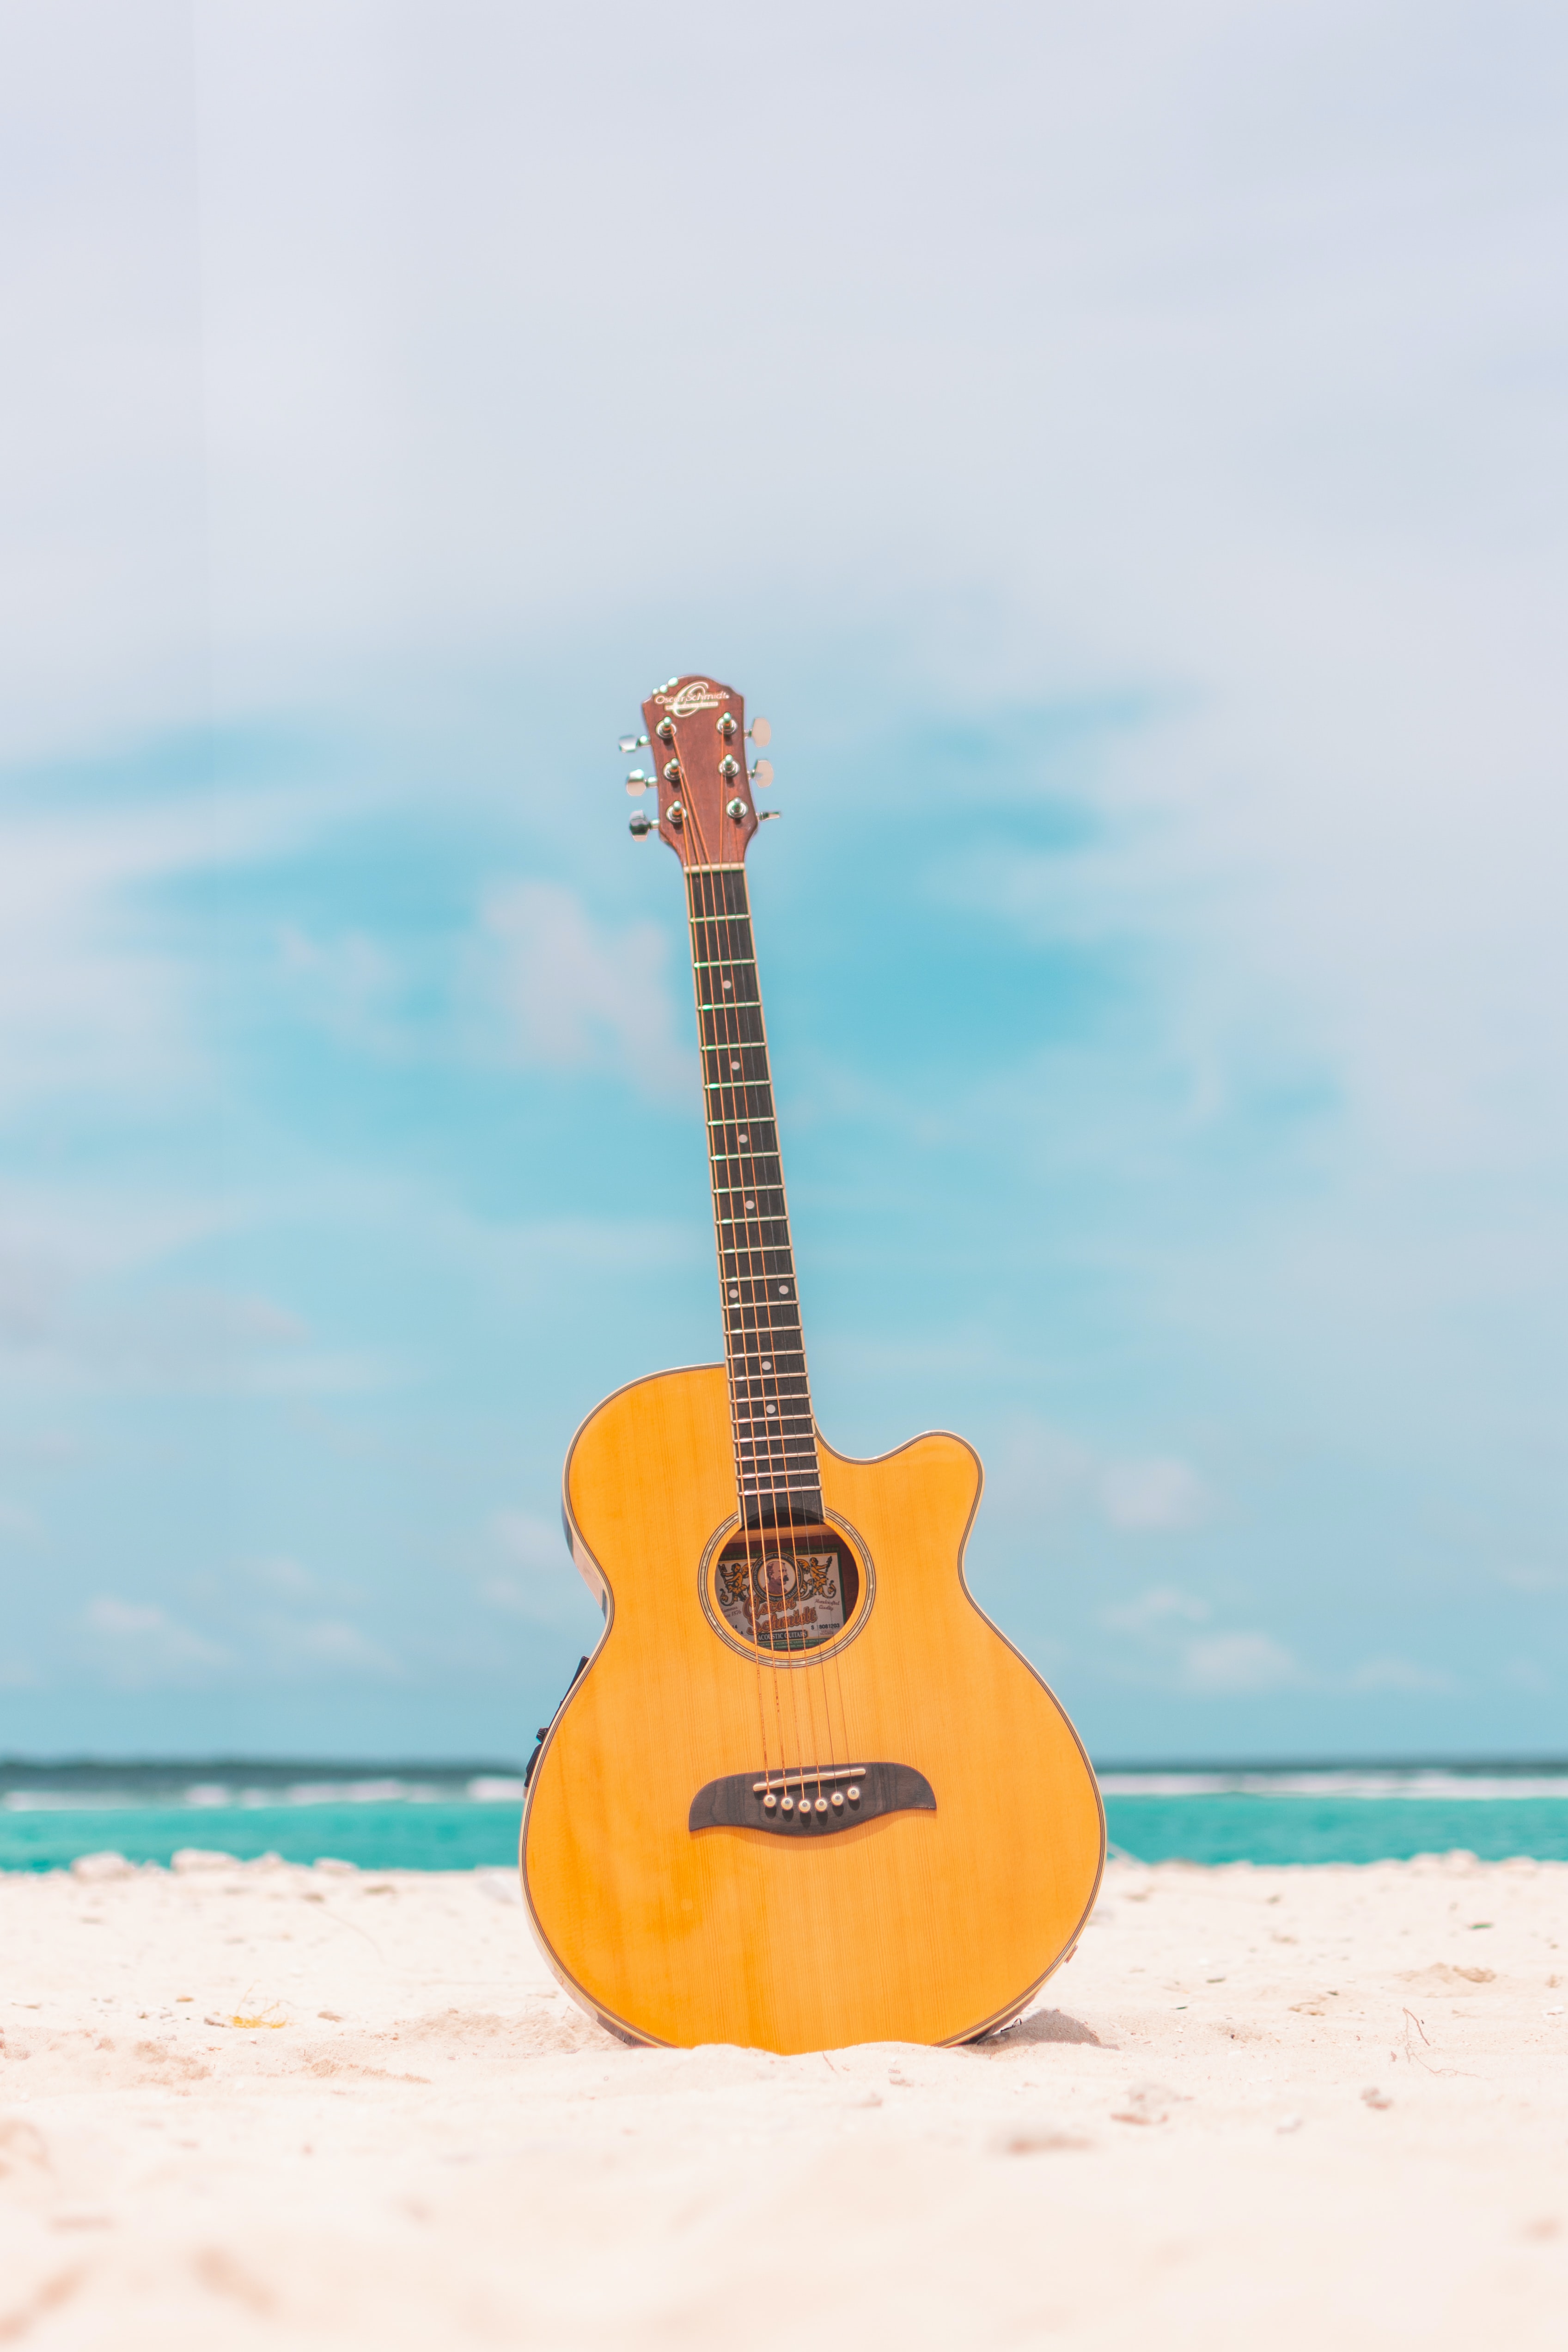 guitar, acoustic guitar, beach, music, summer, tool